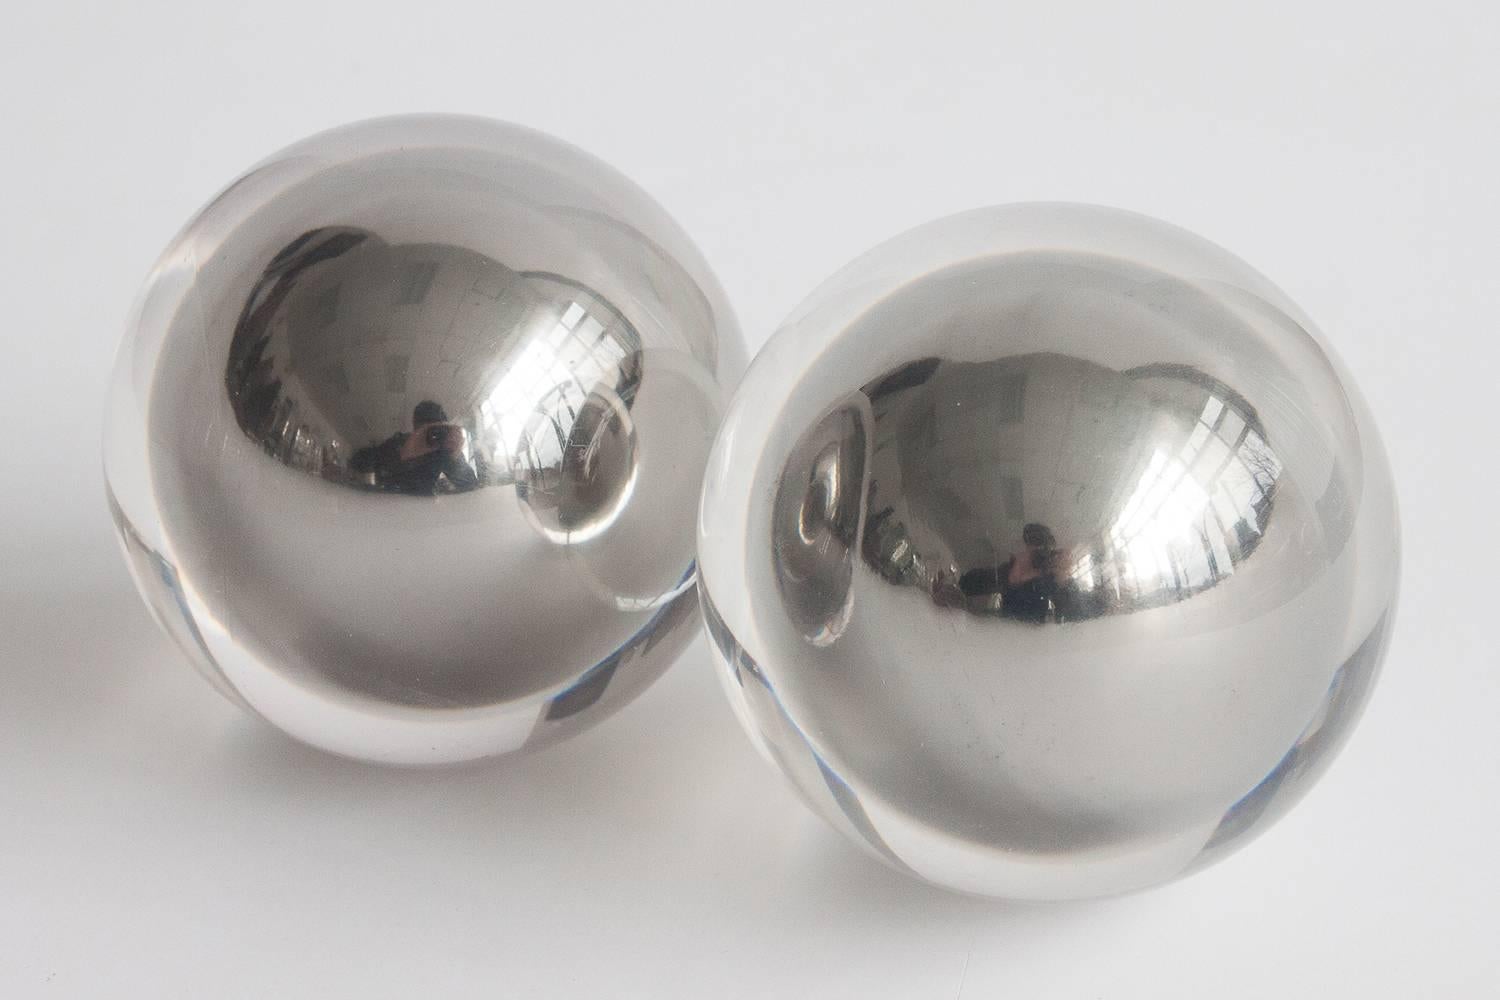 Pair of Lucite sphere sculptures. Polished steel balls encased in Lucite.

Measures: 3